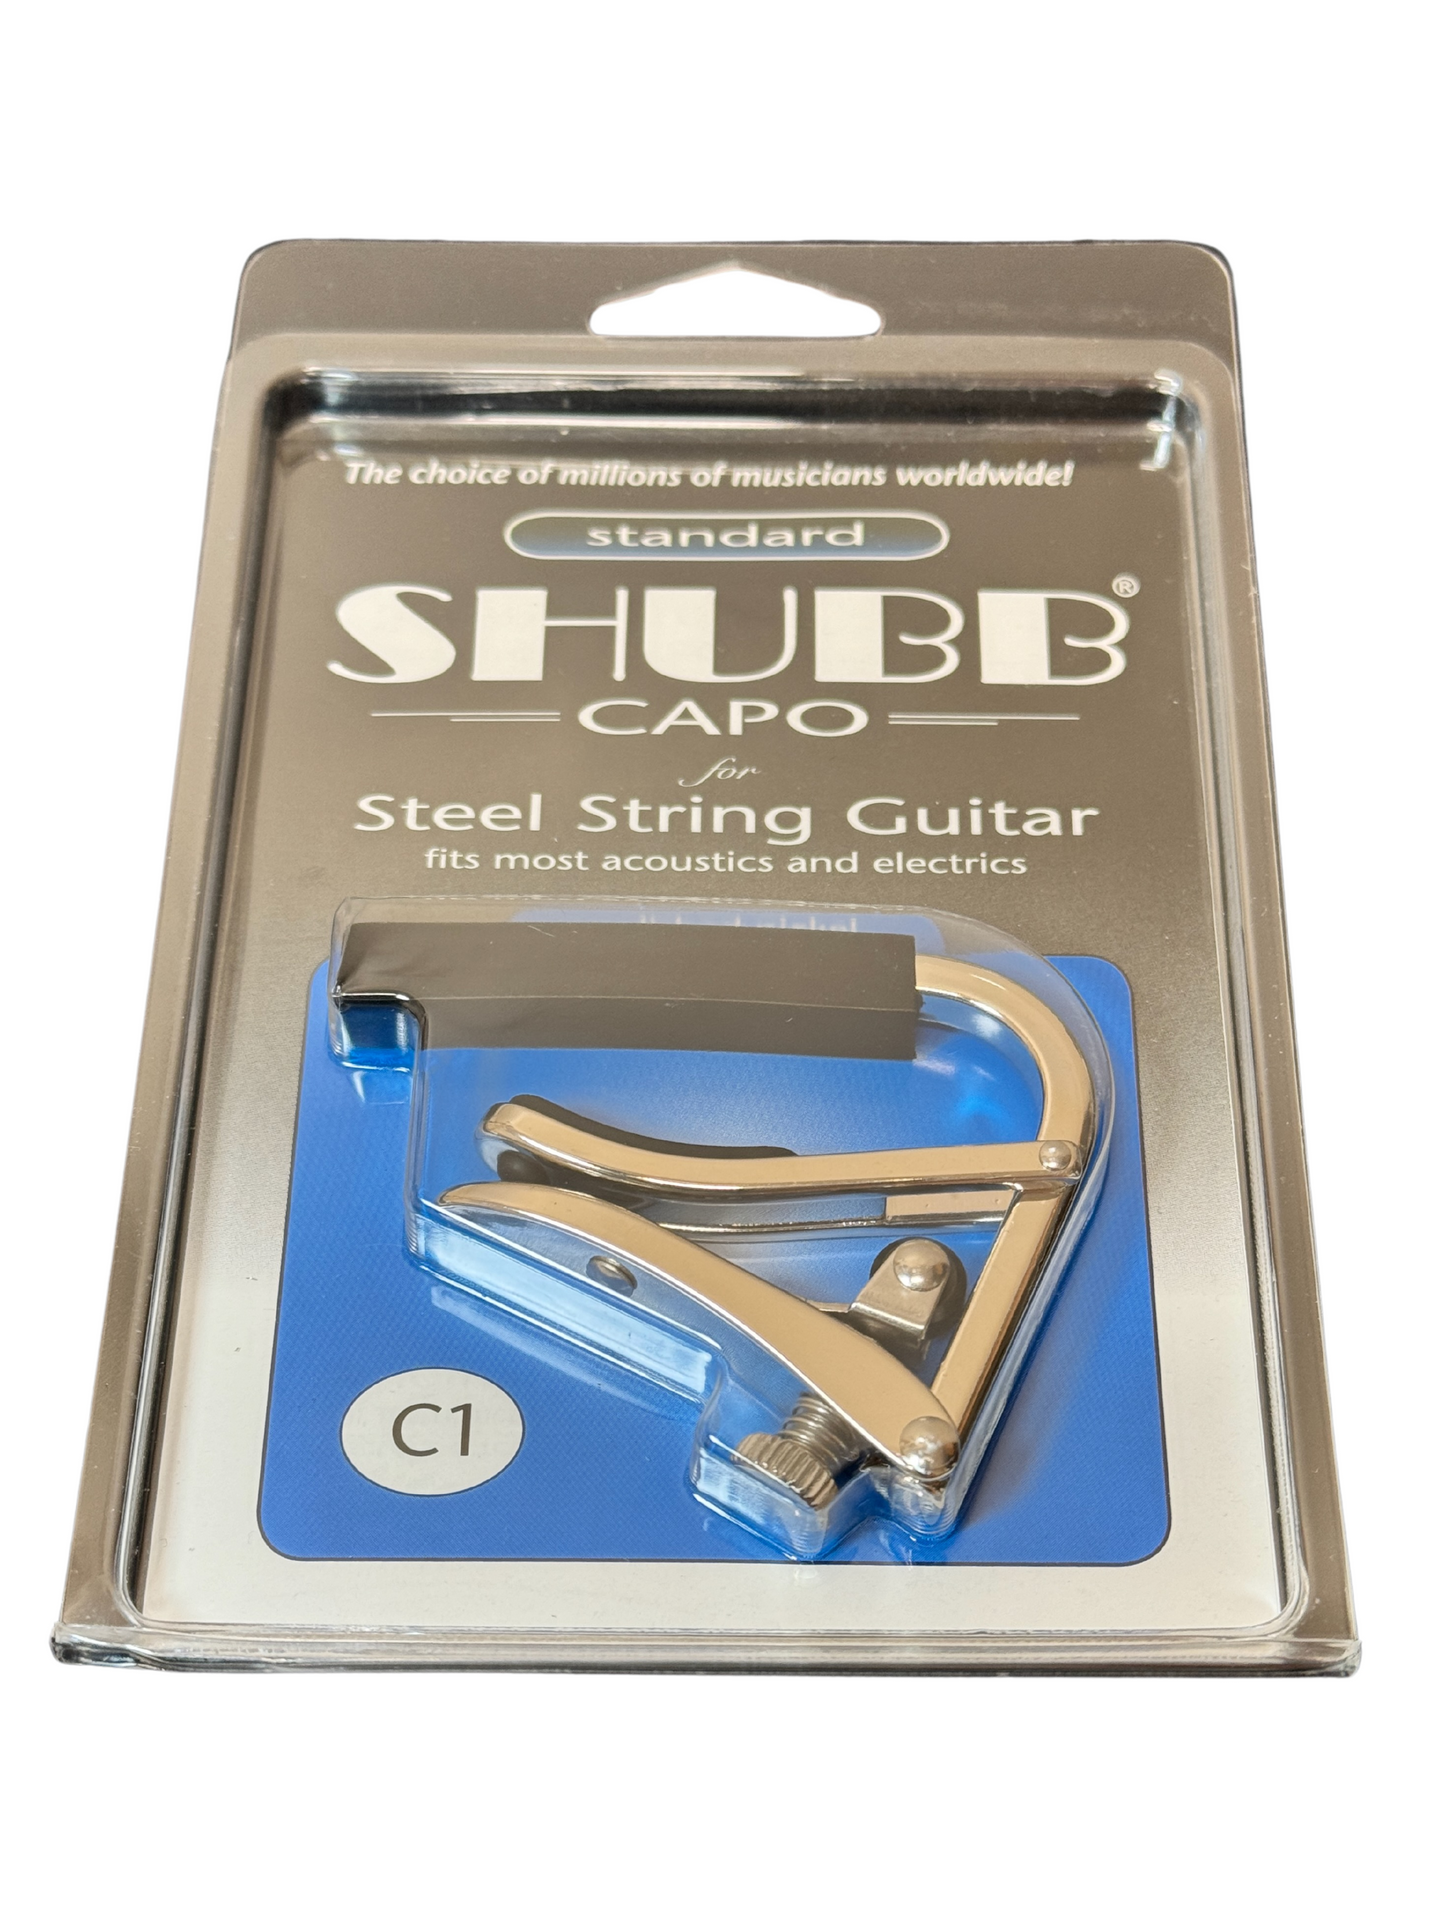 Shubb Capo for Steel String Guitar